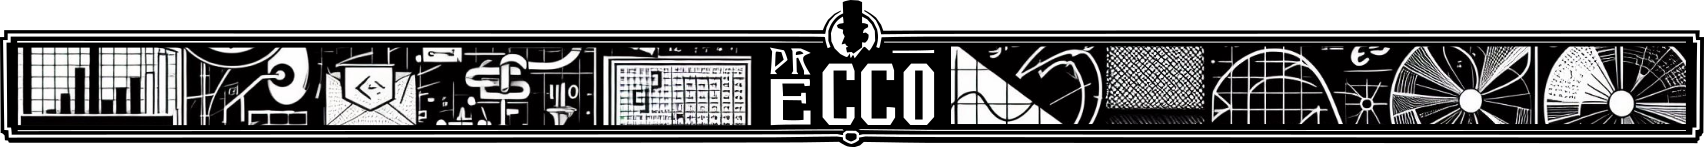 Dr Ecco banner